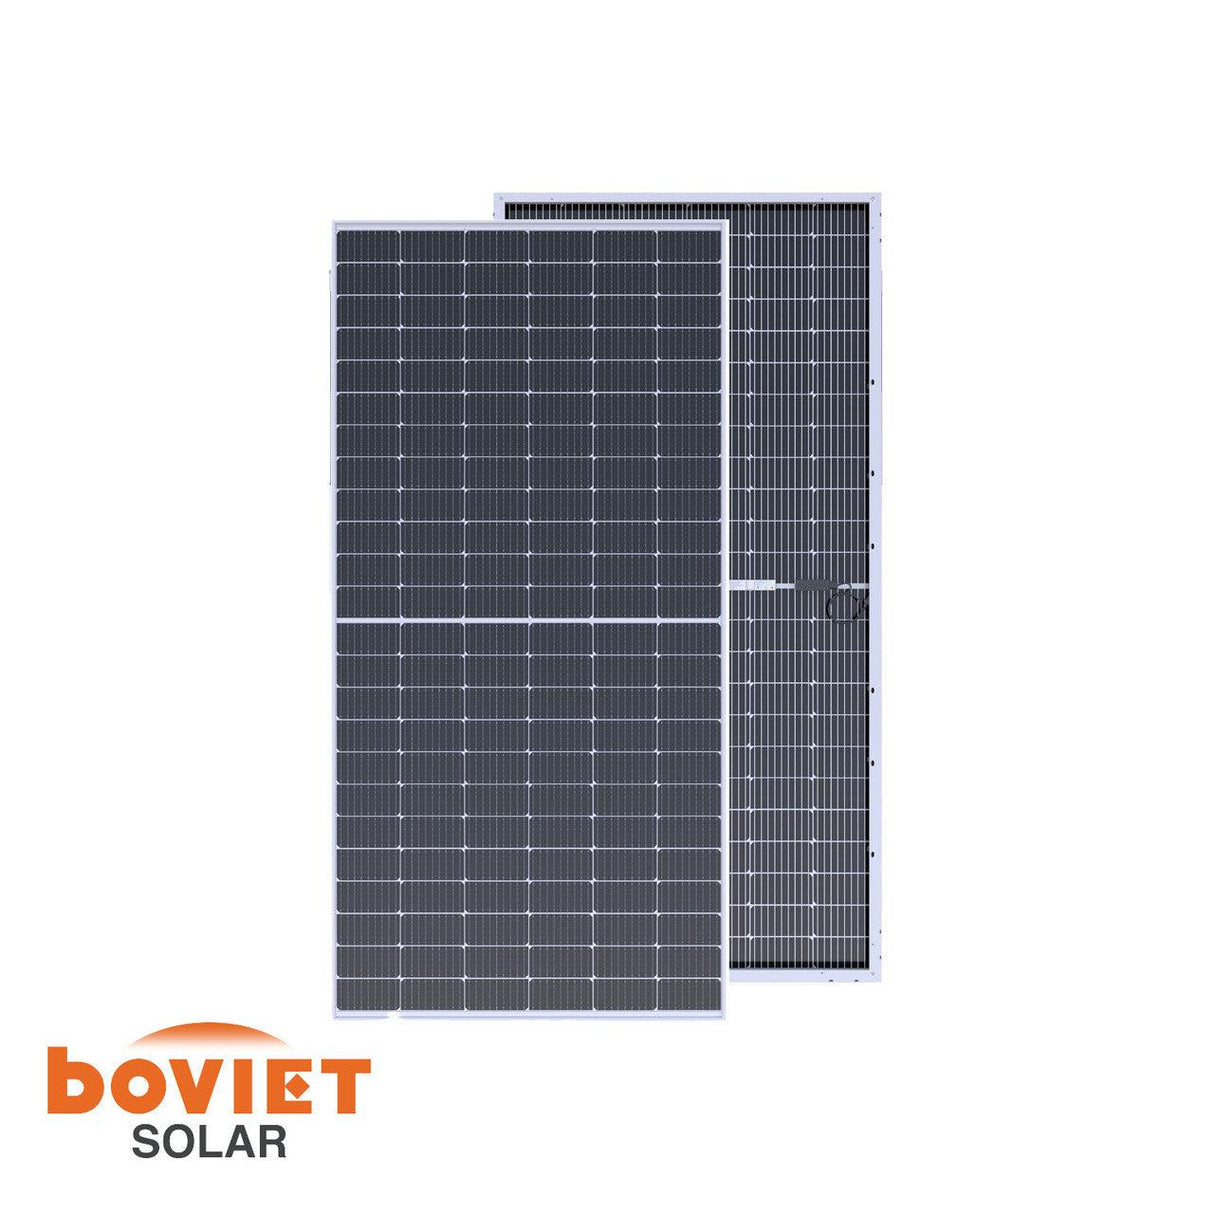 Boviet 450W Bifacial Solar Panel (Silver) | Up to 540W with Bifacial Gain | BVM6612M-450S-H-HC-BF-DG